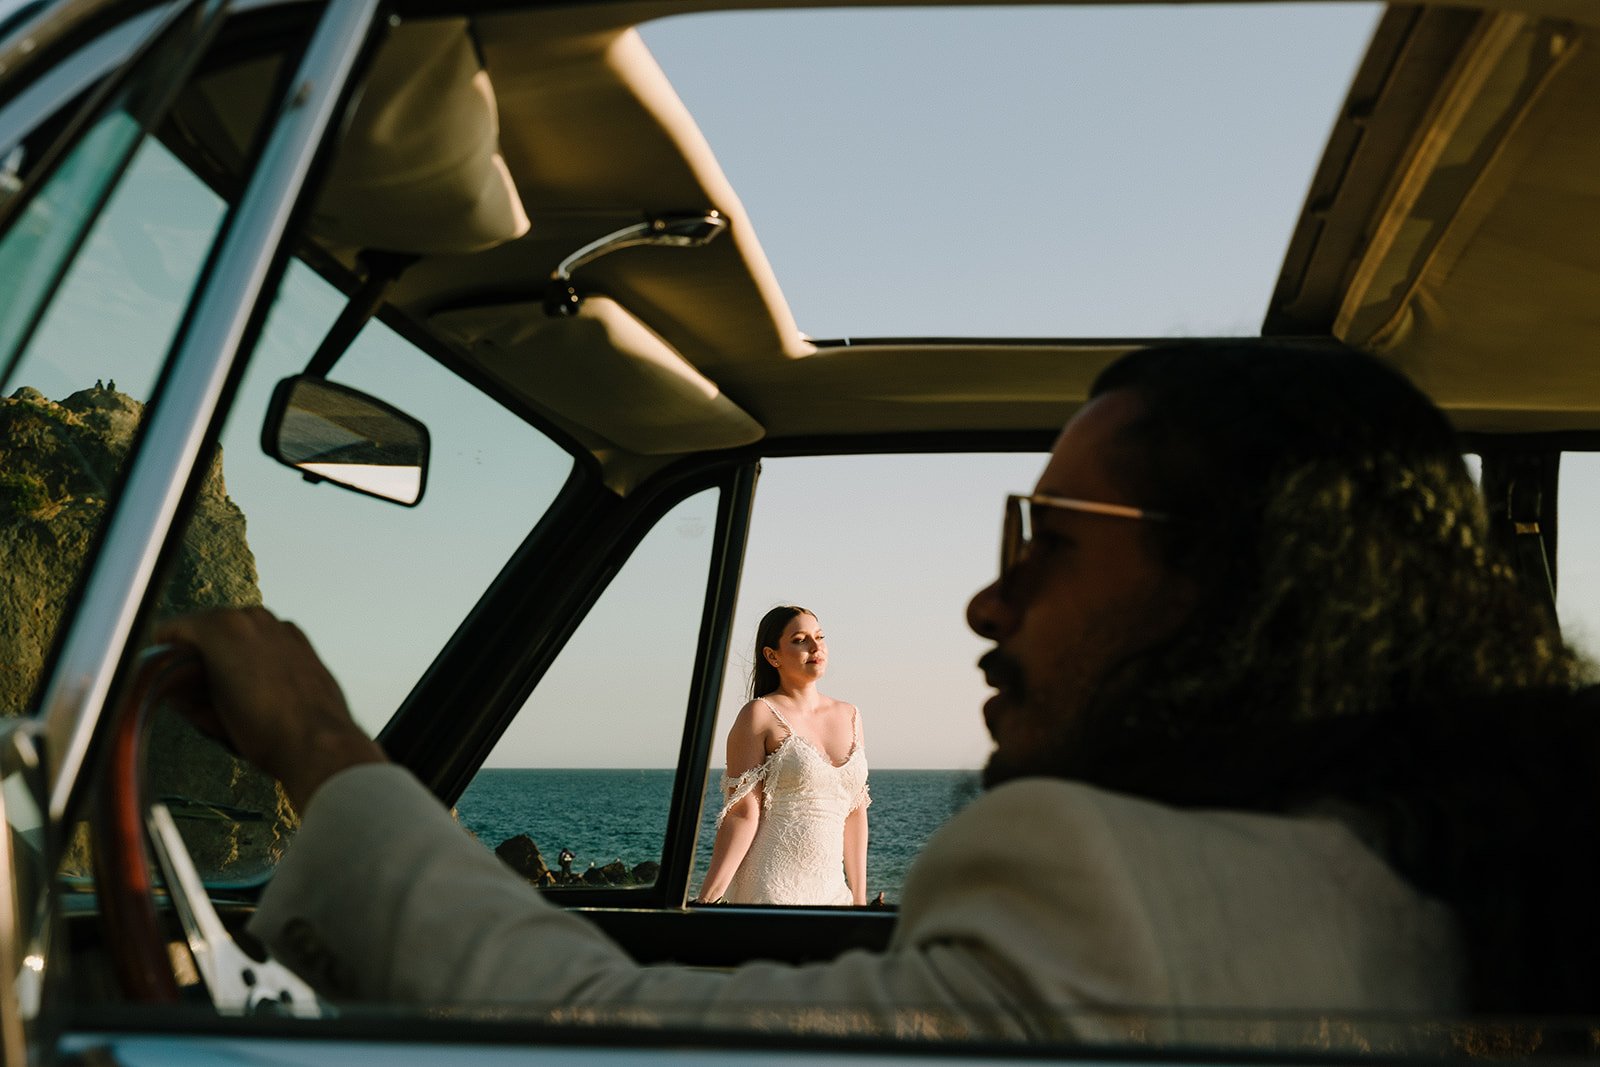 Intimate Malibu Elopement on The Beach - Natalie Nicole Photo - Destination Wedding Photographer (103).jpg